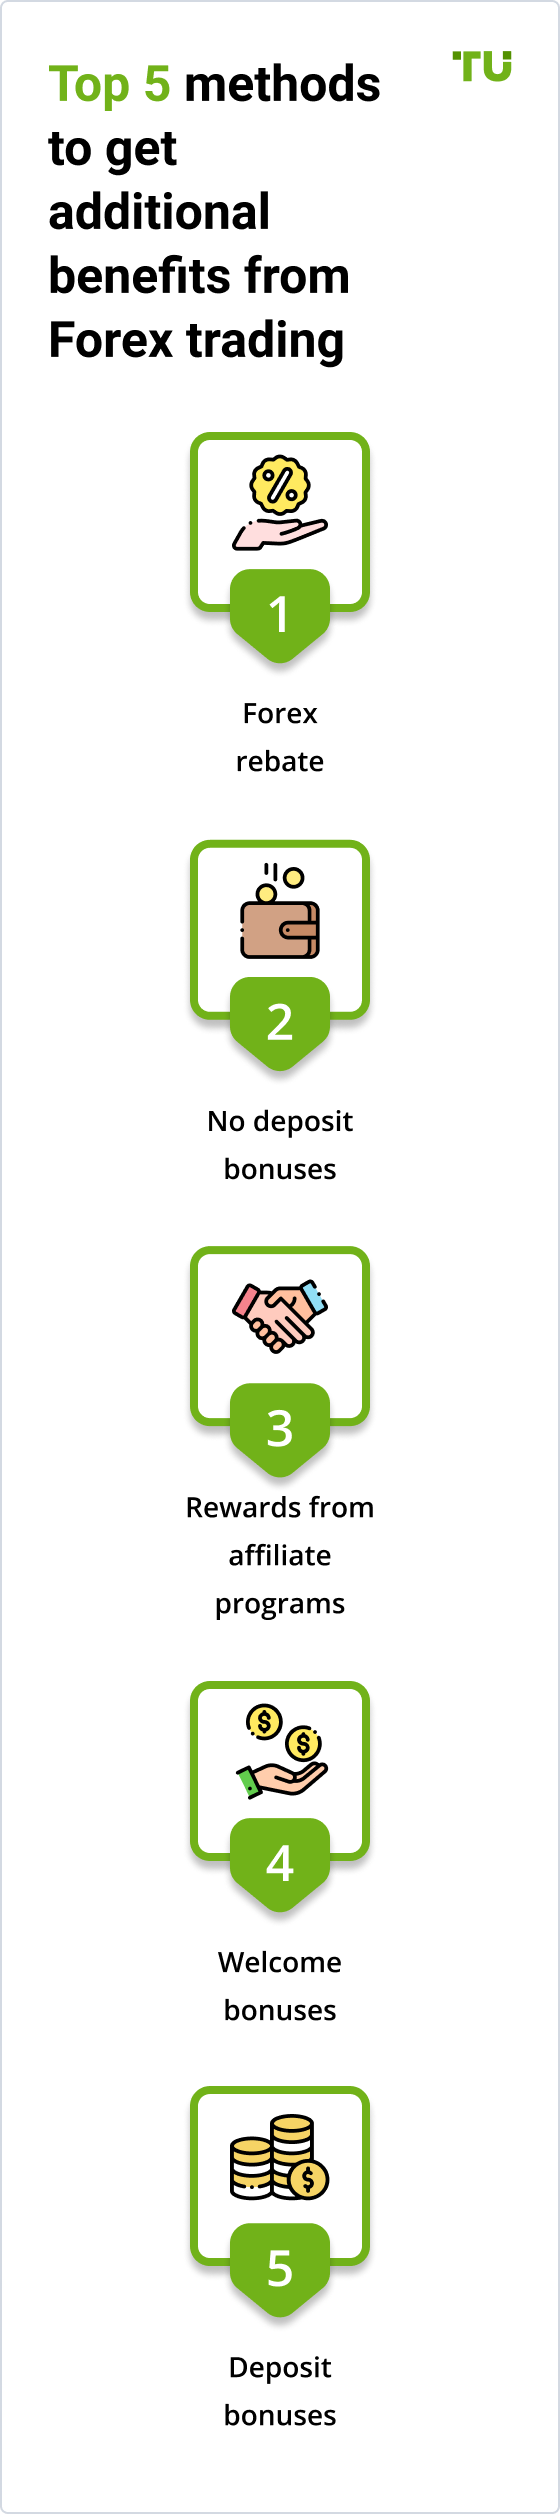 Bonus without forex replenishment hotforex bonuses to open